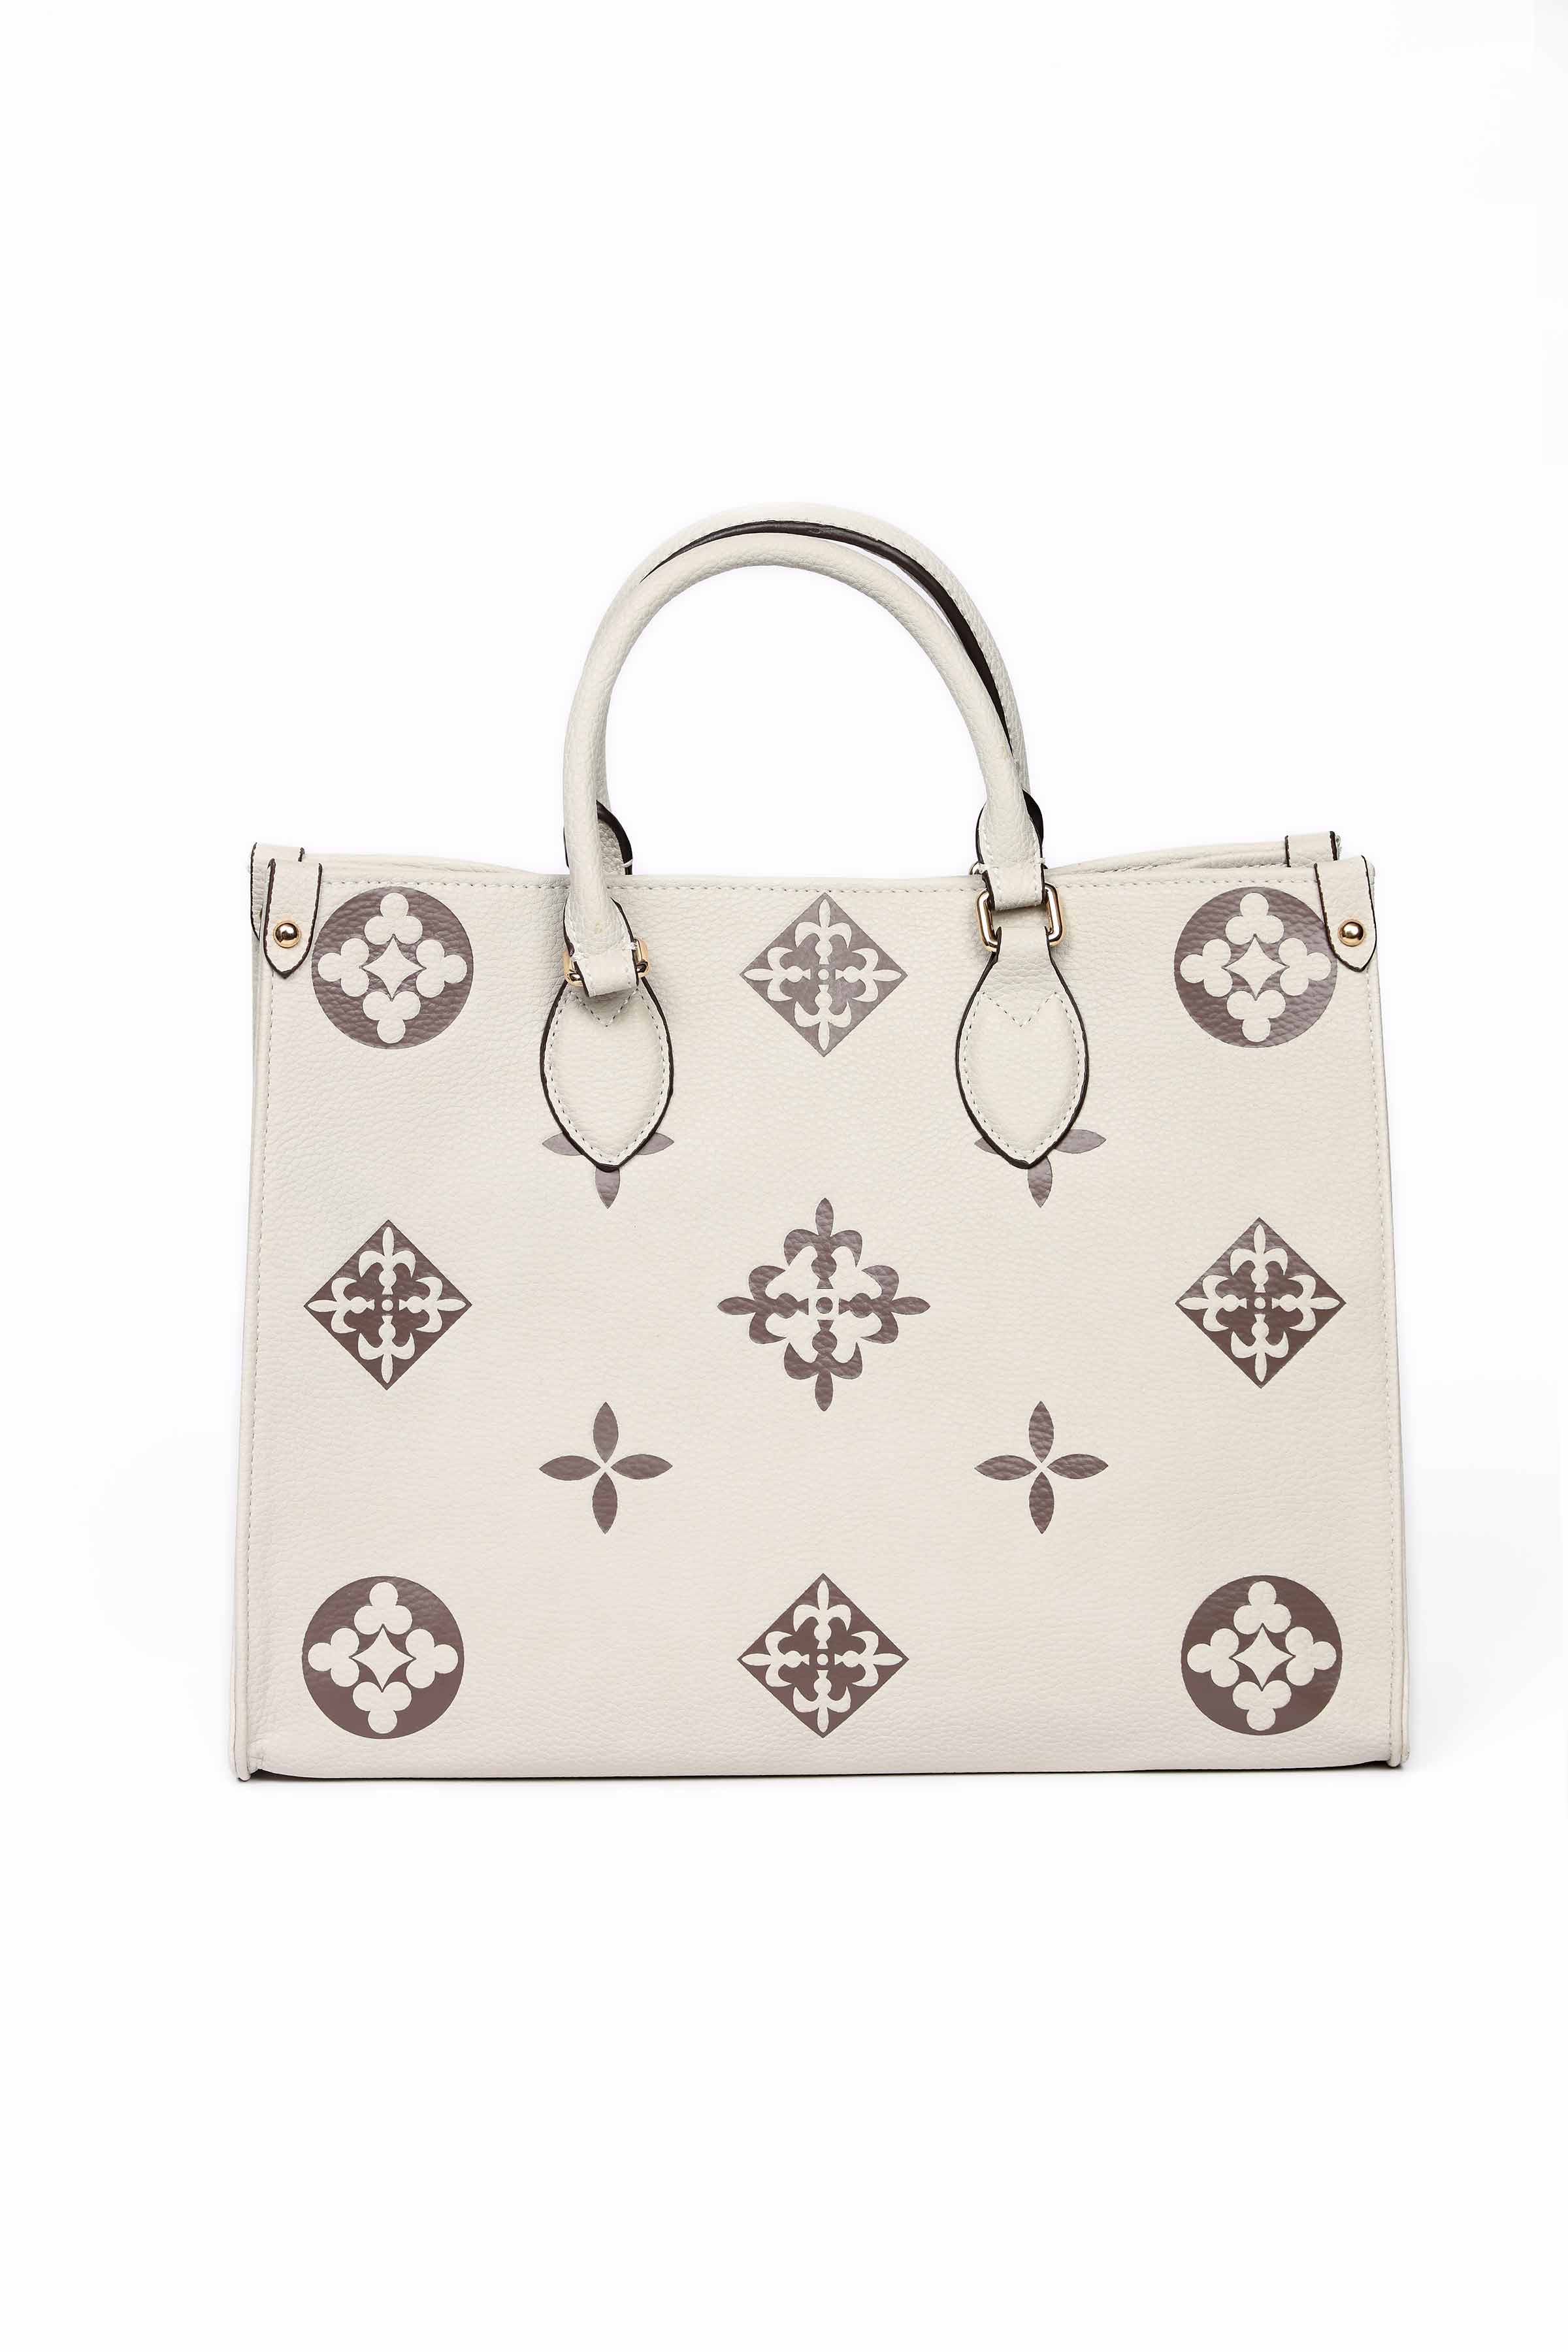 Hand purse design for girls | Handbag Design for girl | Handbag Design For  Womens | Stylish Handbag - YouTube